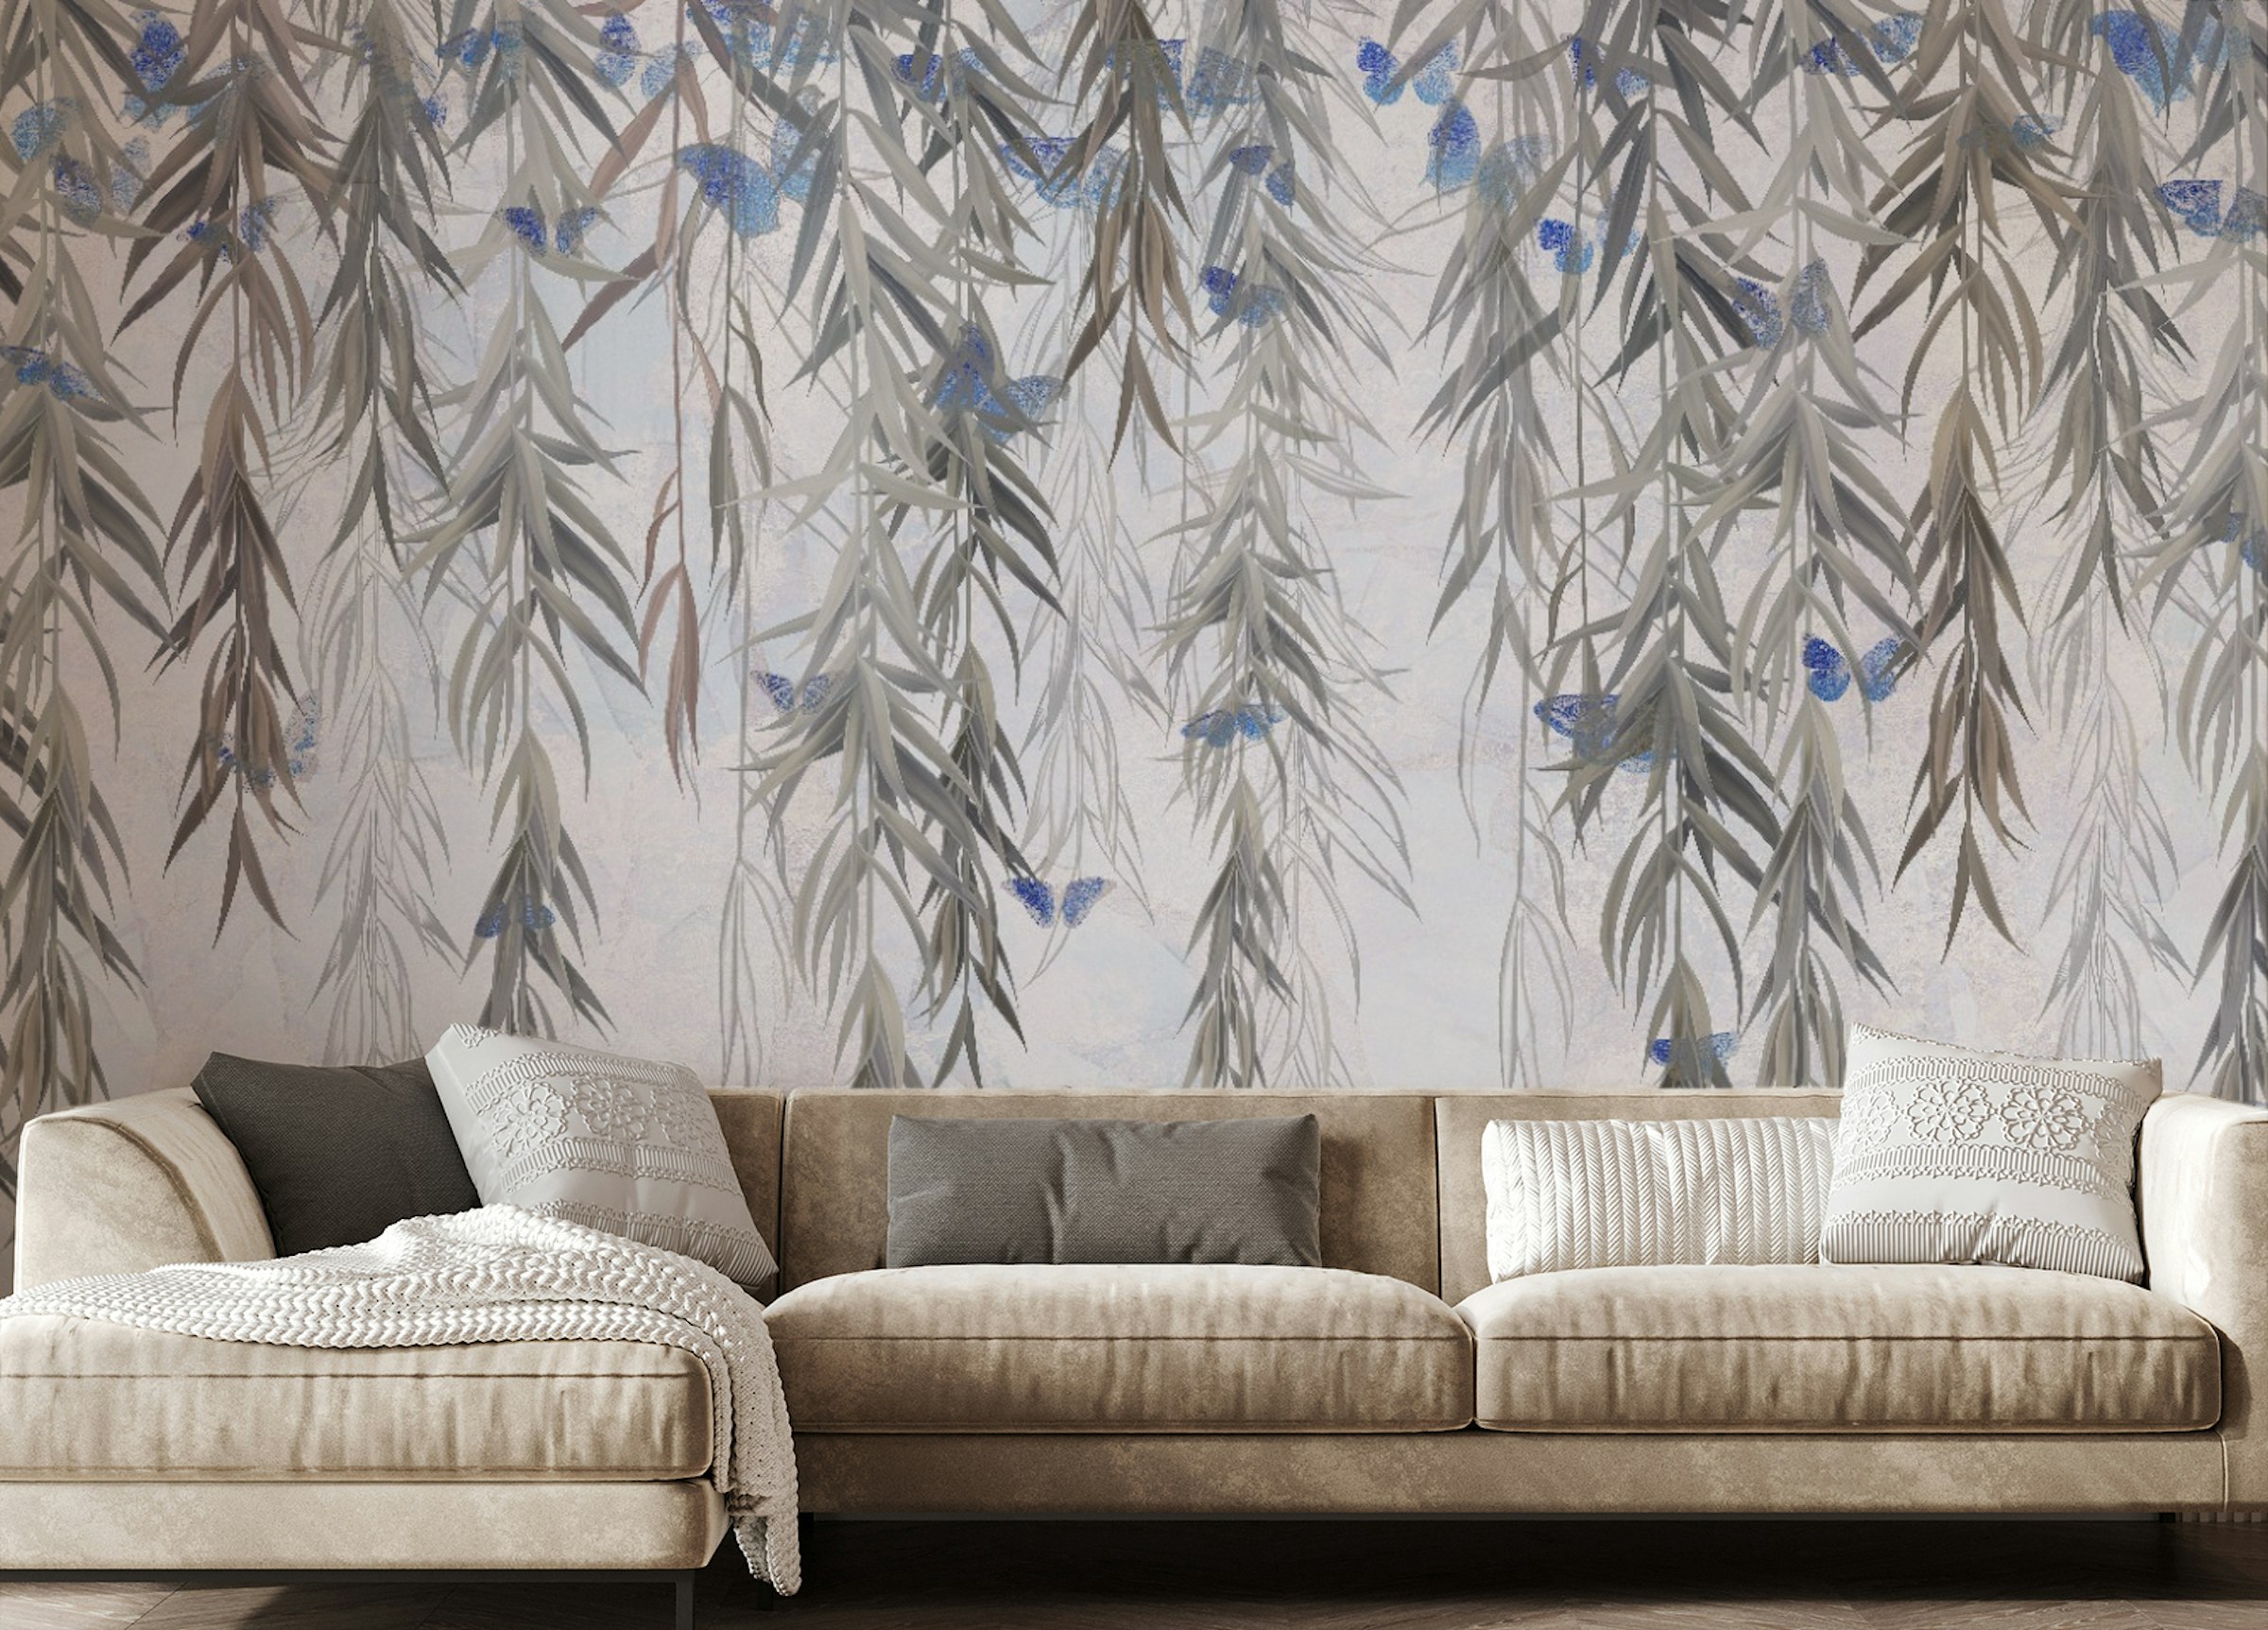 Custom made Hanging Willows on Grey Wallpaper Mural